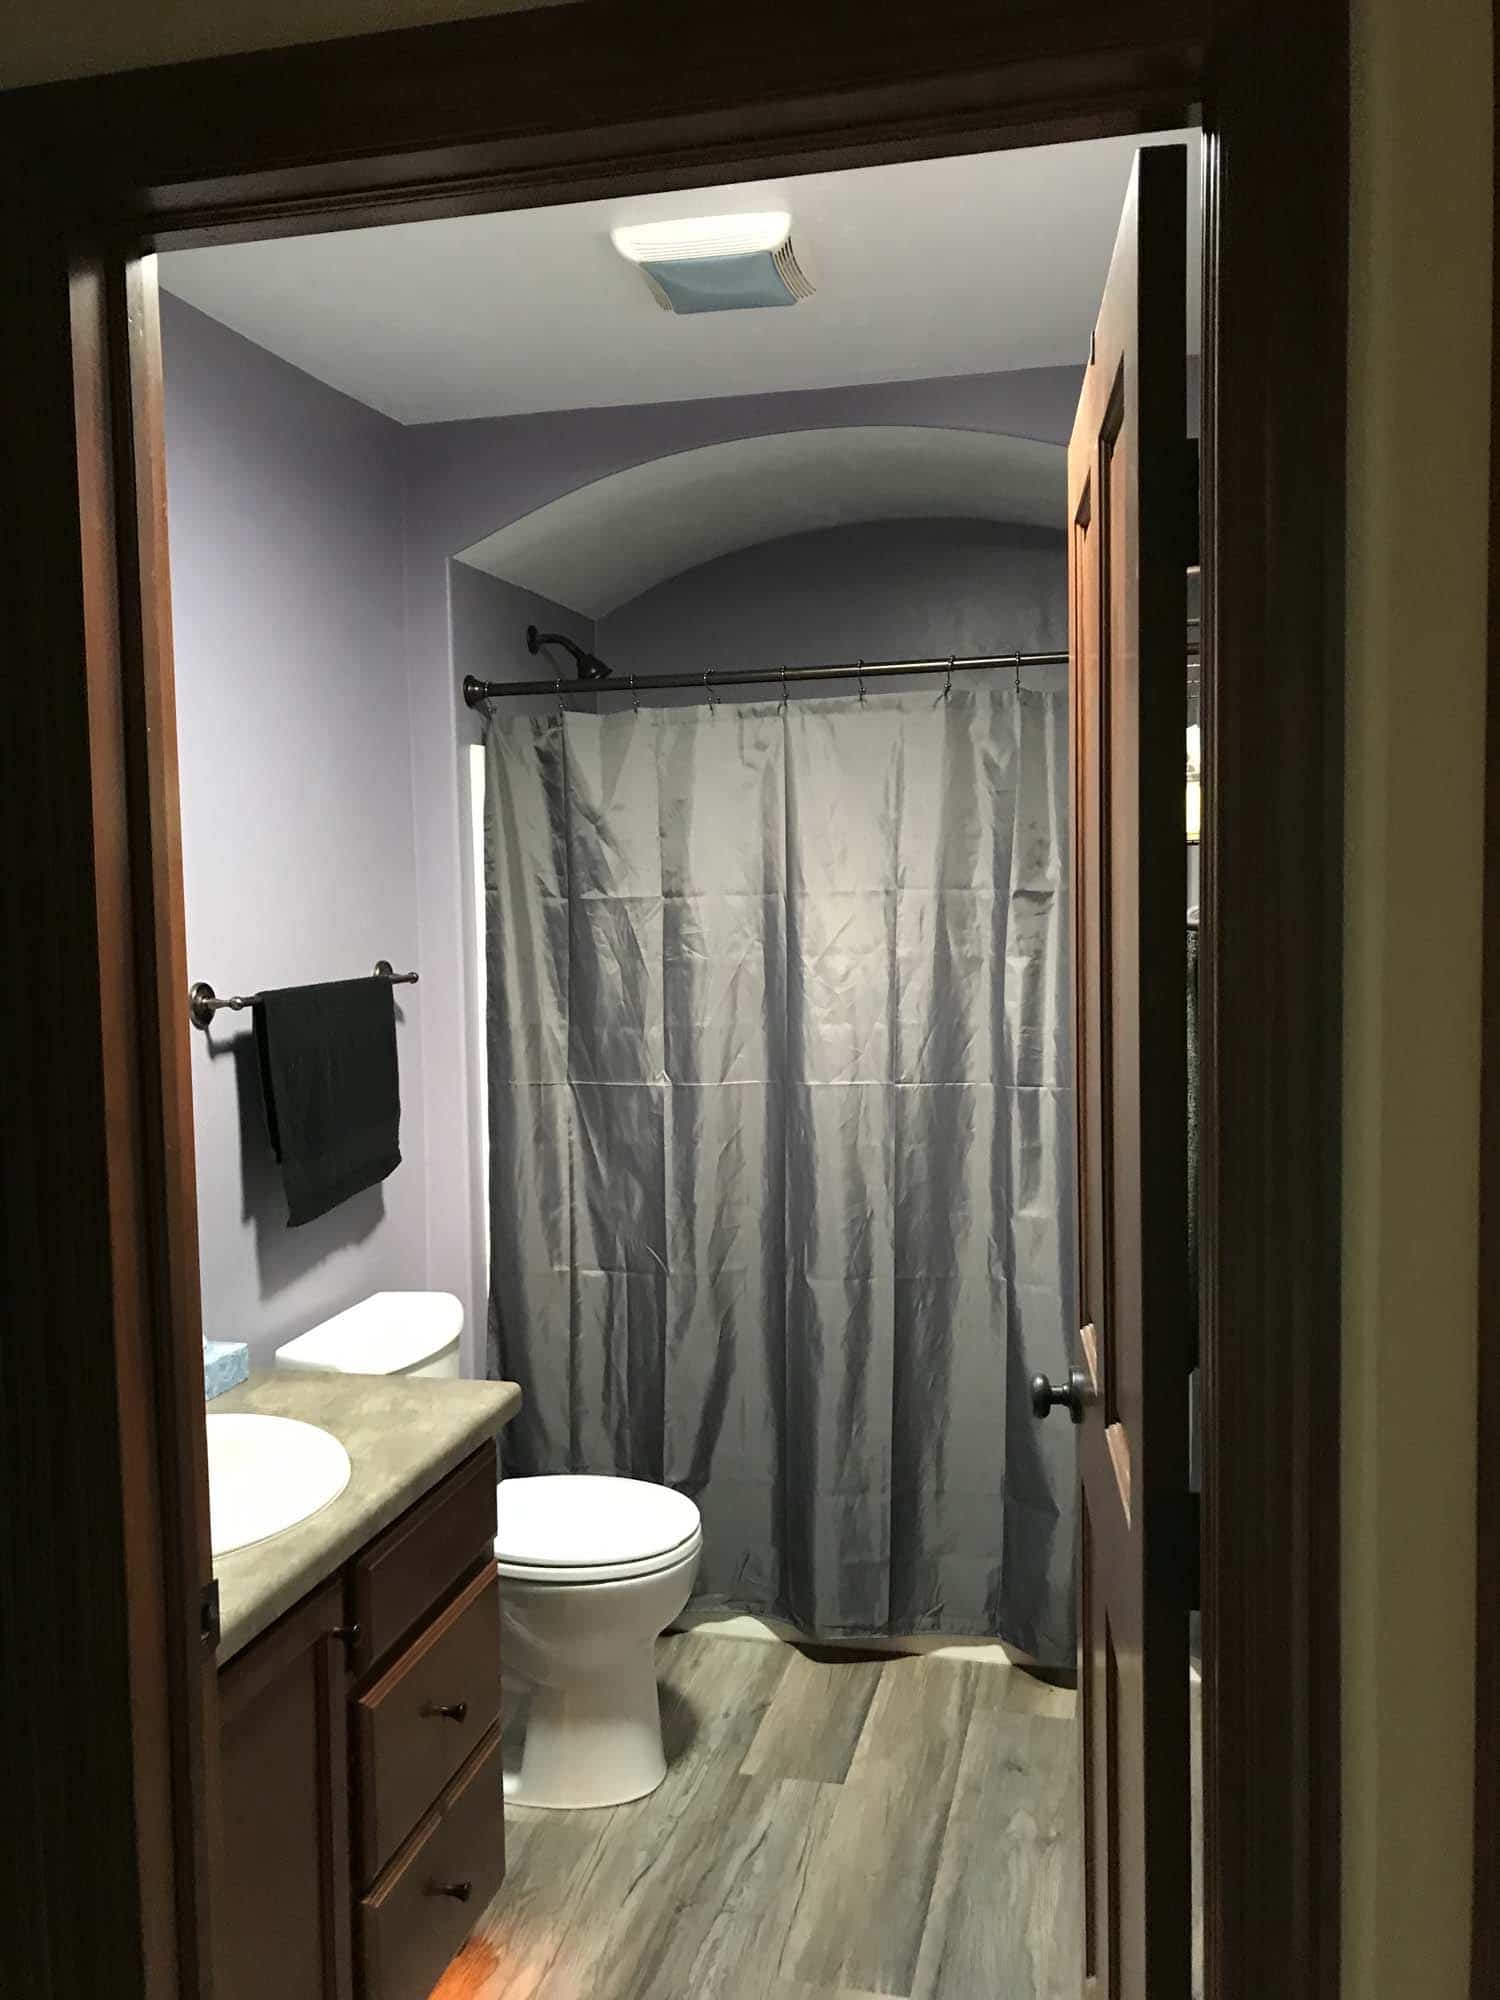 Small square skylight illuminates a hall bathroom